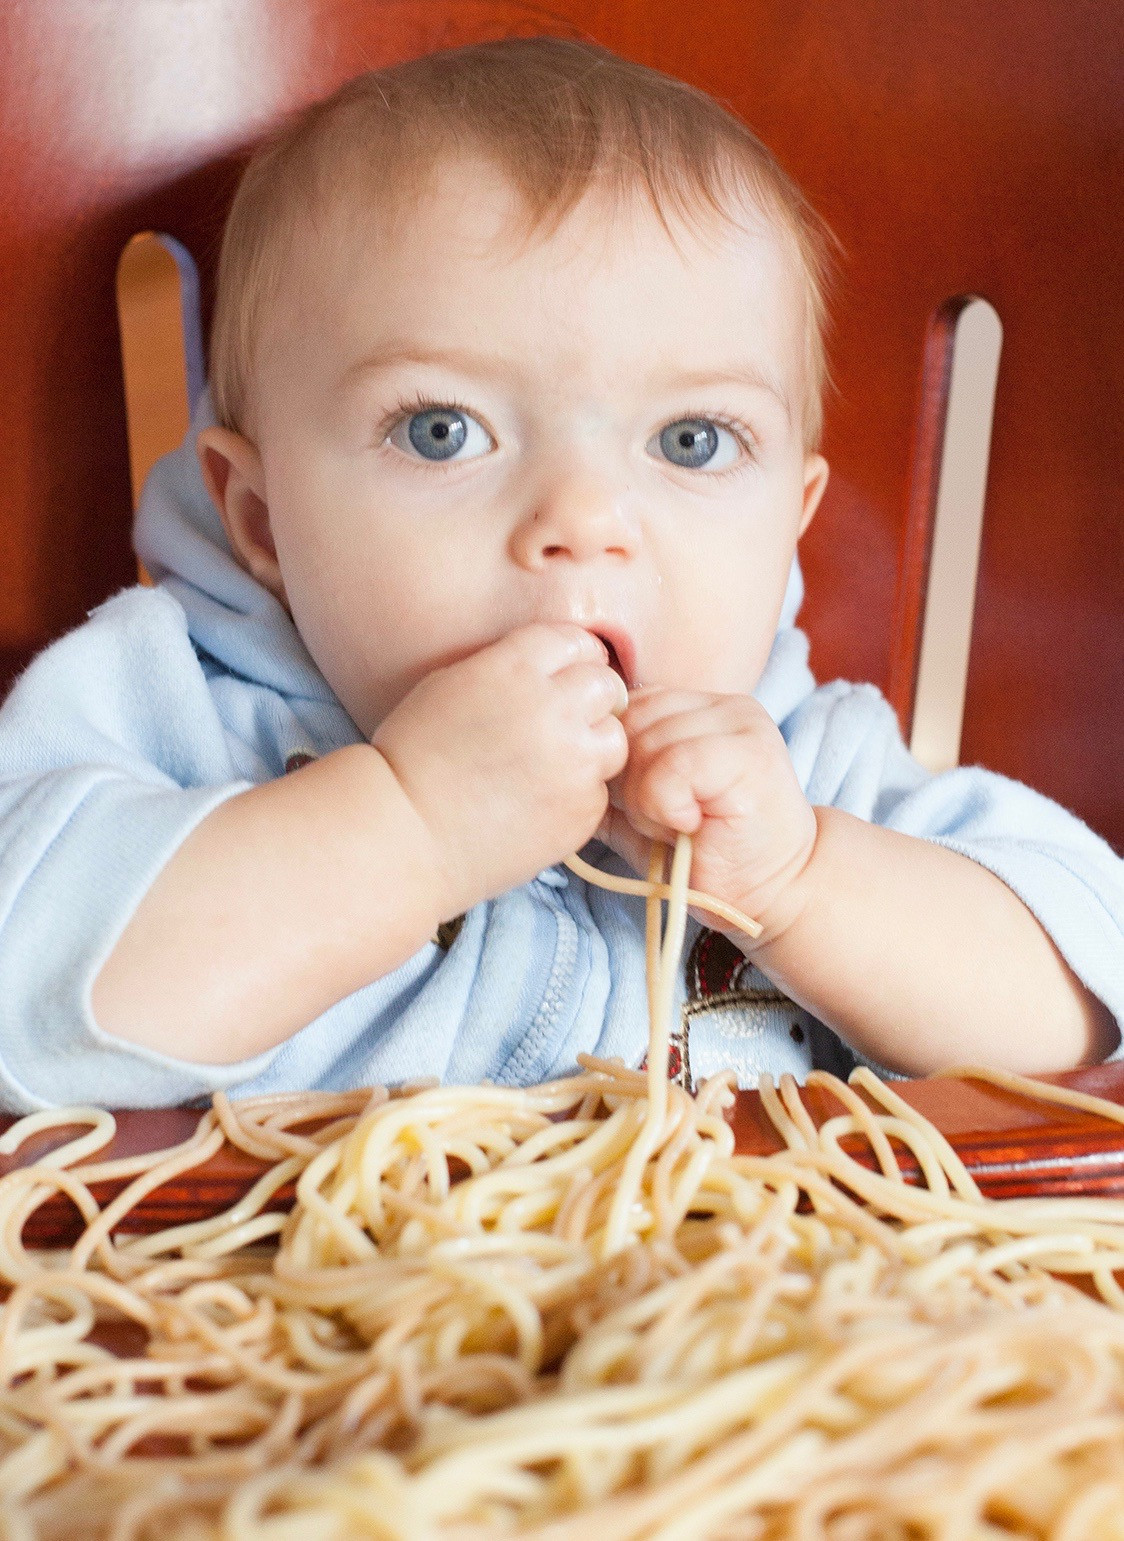 Baby Eating Spaghetti
 bambini